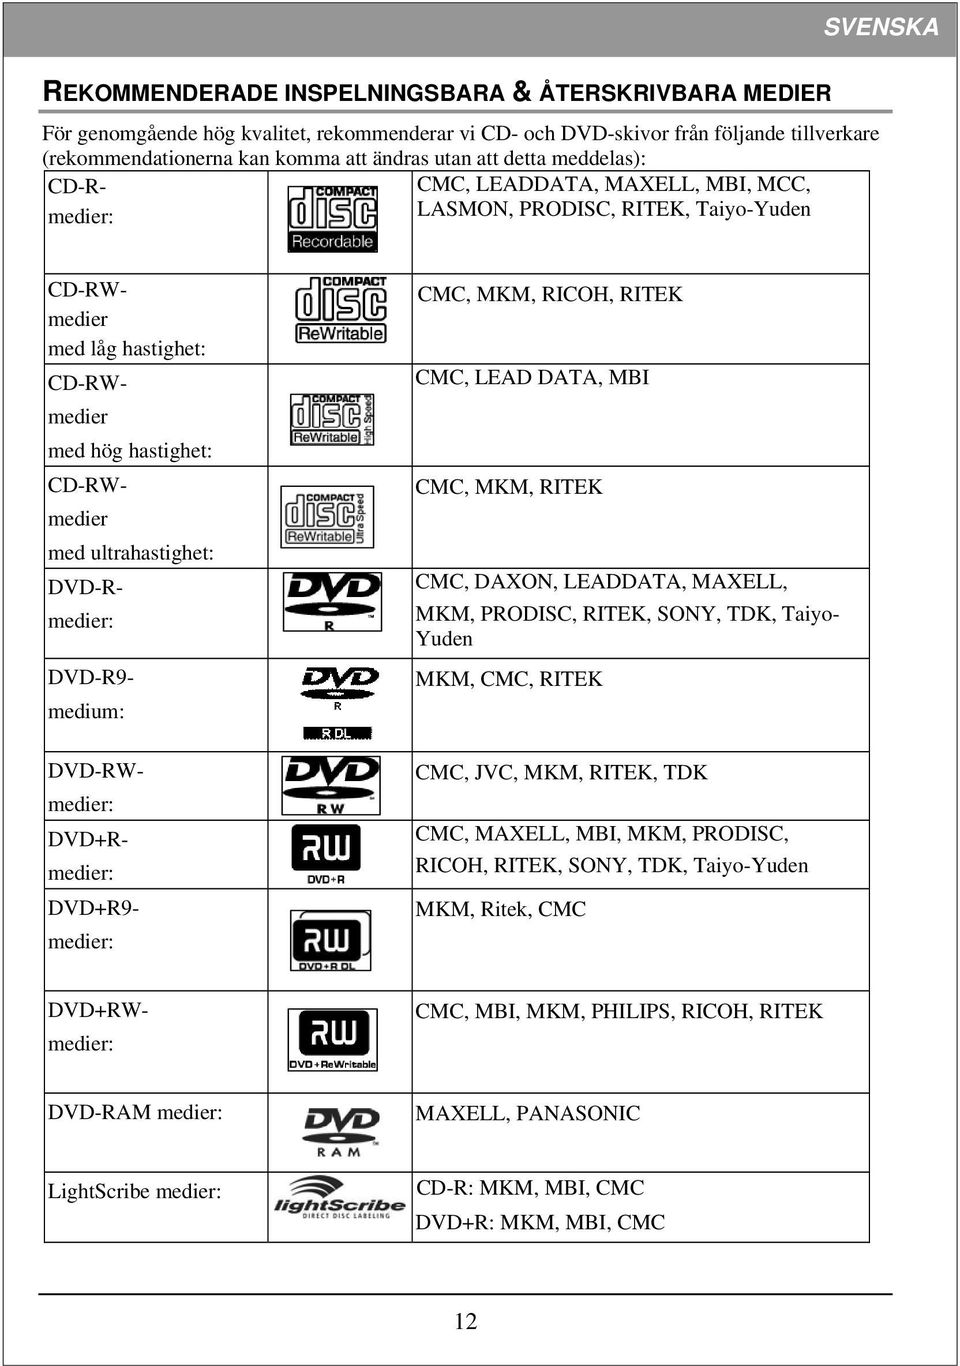 DVD-Rmedier: DVD-R9- medium: DVD-RWmedier: DVD+Rmedier: DVD+R9- medier: CMC, MKM, RICOH, RITEK CMC, LEAD DATA, MBI CMC, MKM, RITEK CMC, DAXON, LEADDATA, MAXELL, MKM, PRODISC, RITEK, SONY, TDK, Taiyo-